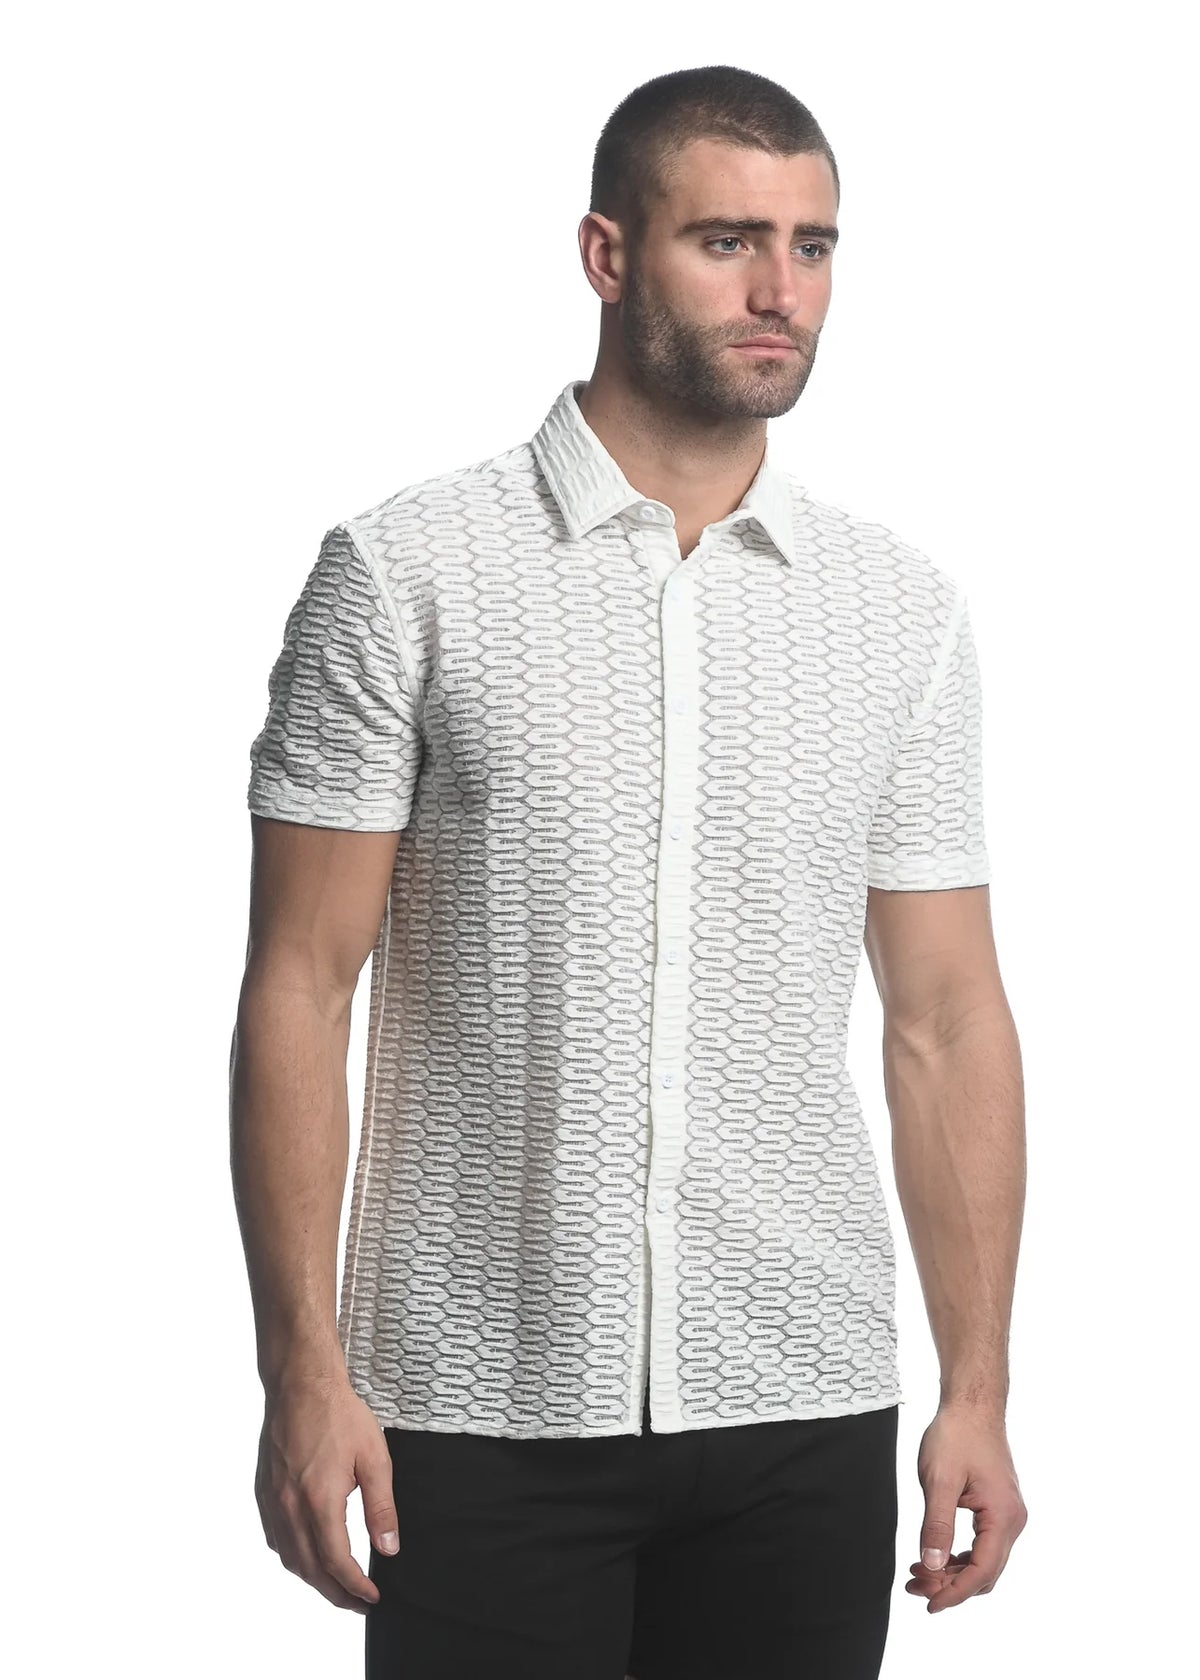 Stretch Knit Lace Gossamer Shirt (White Maze Hex)